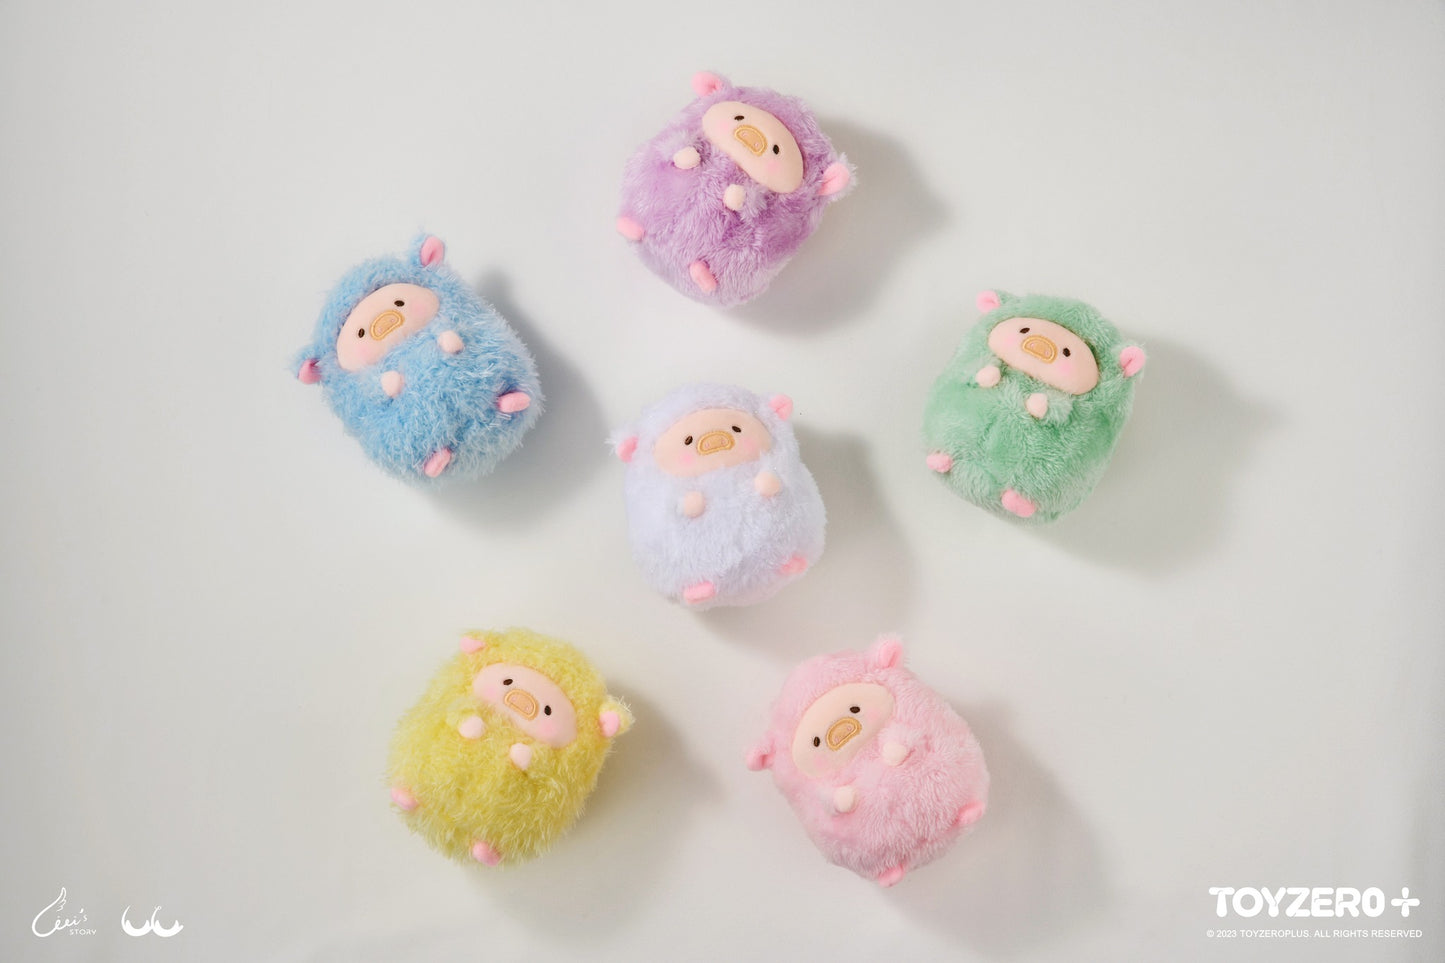 LuLu the Piggy - LuLu Rainbow Sheep Plush Blind Box 罐頭豬LuLu彩虹豬羊毛絨公仔盲盒